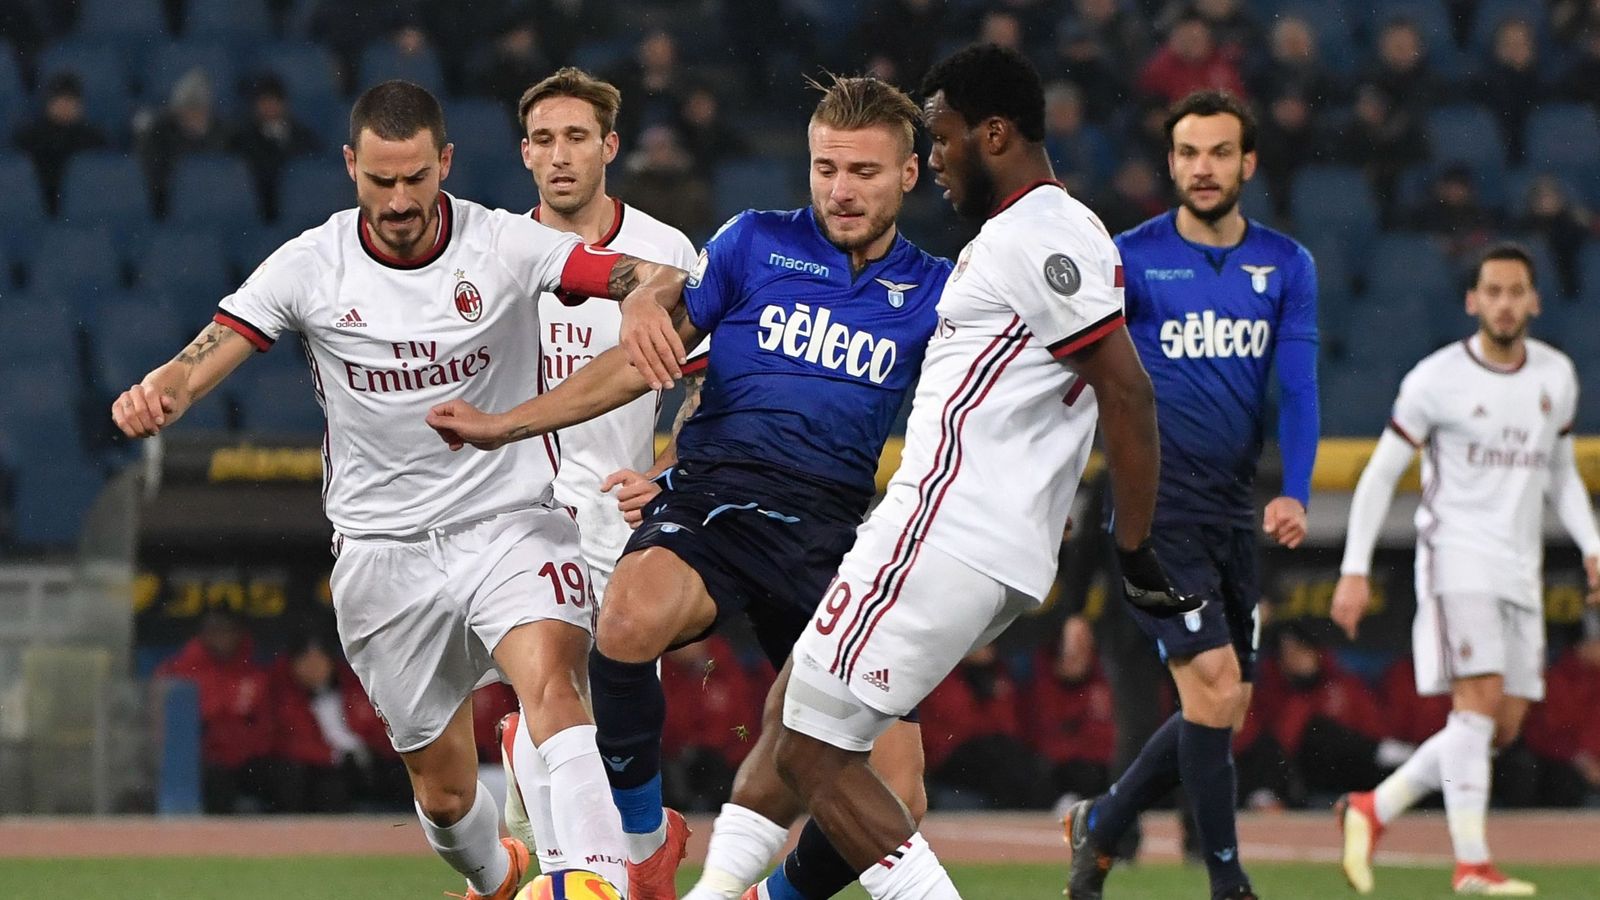 Lazio 0 - 0 AC Milan - Match Report & Highlights